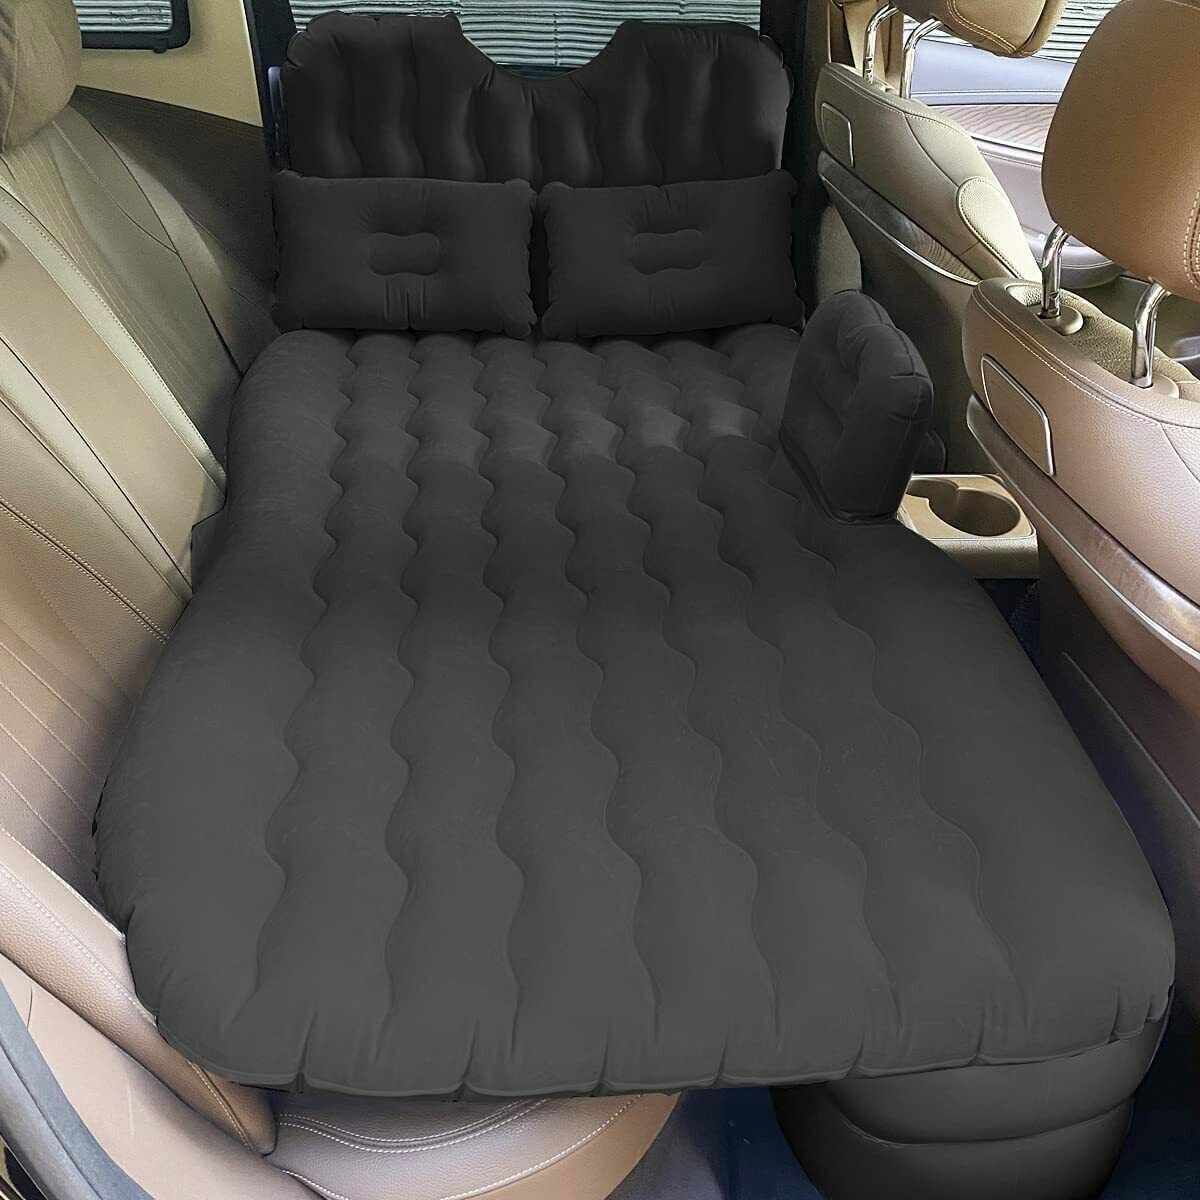 Boriyuan Car Inflatable Mattress General Suv Car Bed Rear Seat Cushion Pneumatic Sleep Camping